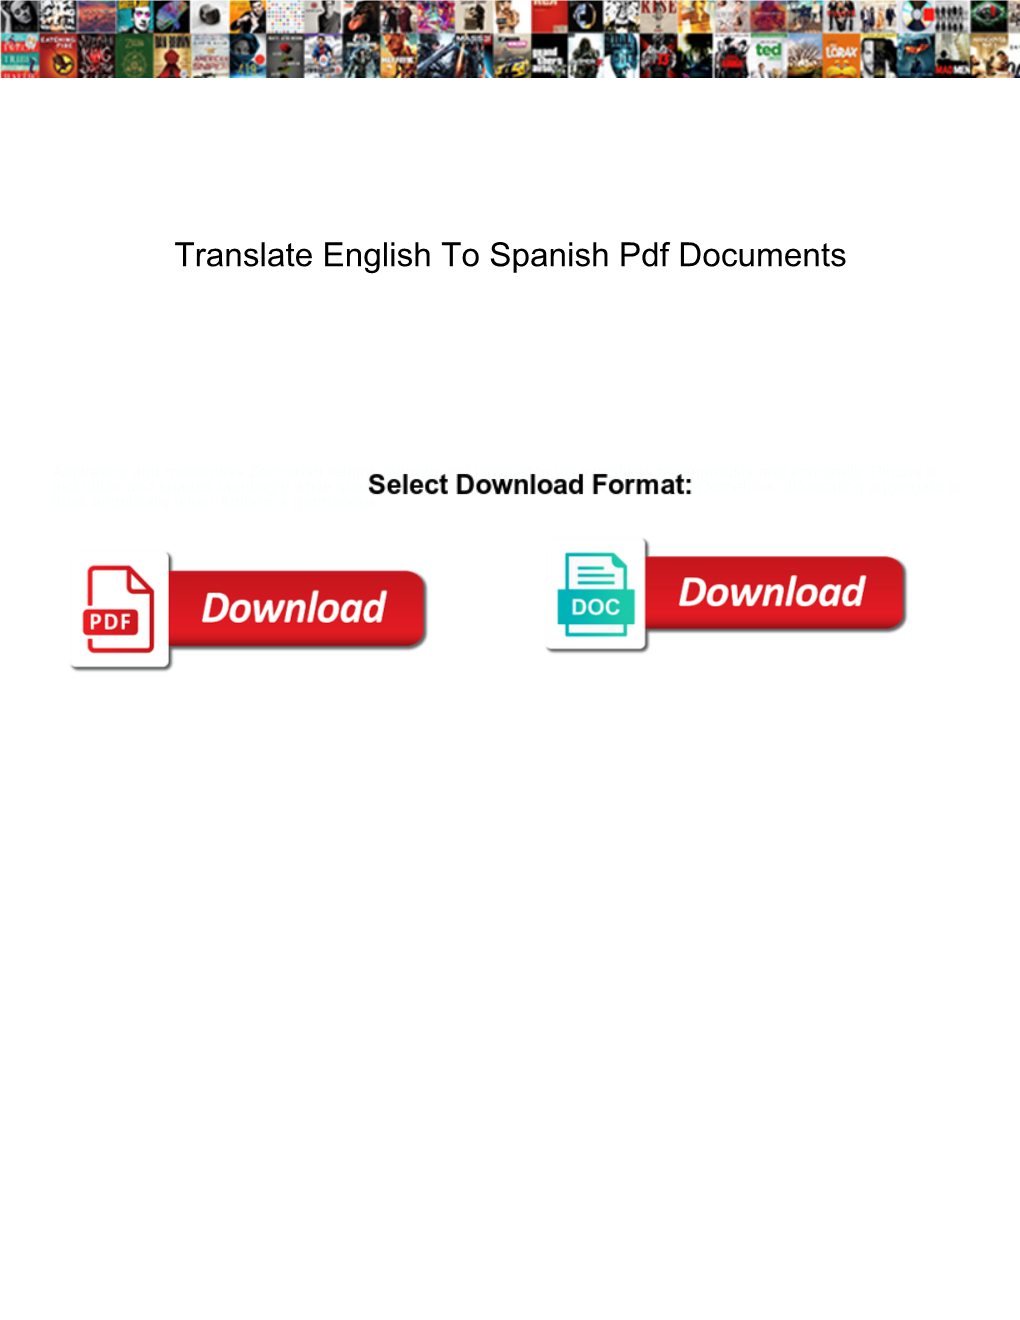 Translate English to Spanish Pdf Documents